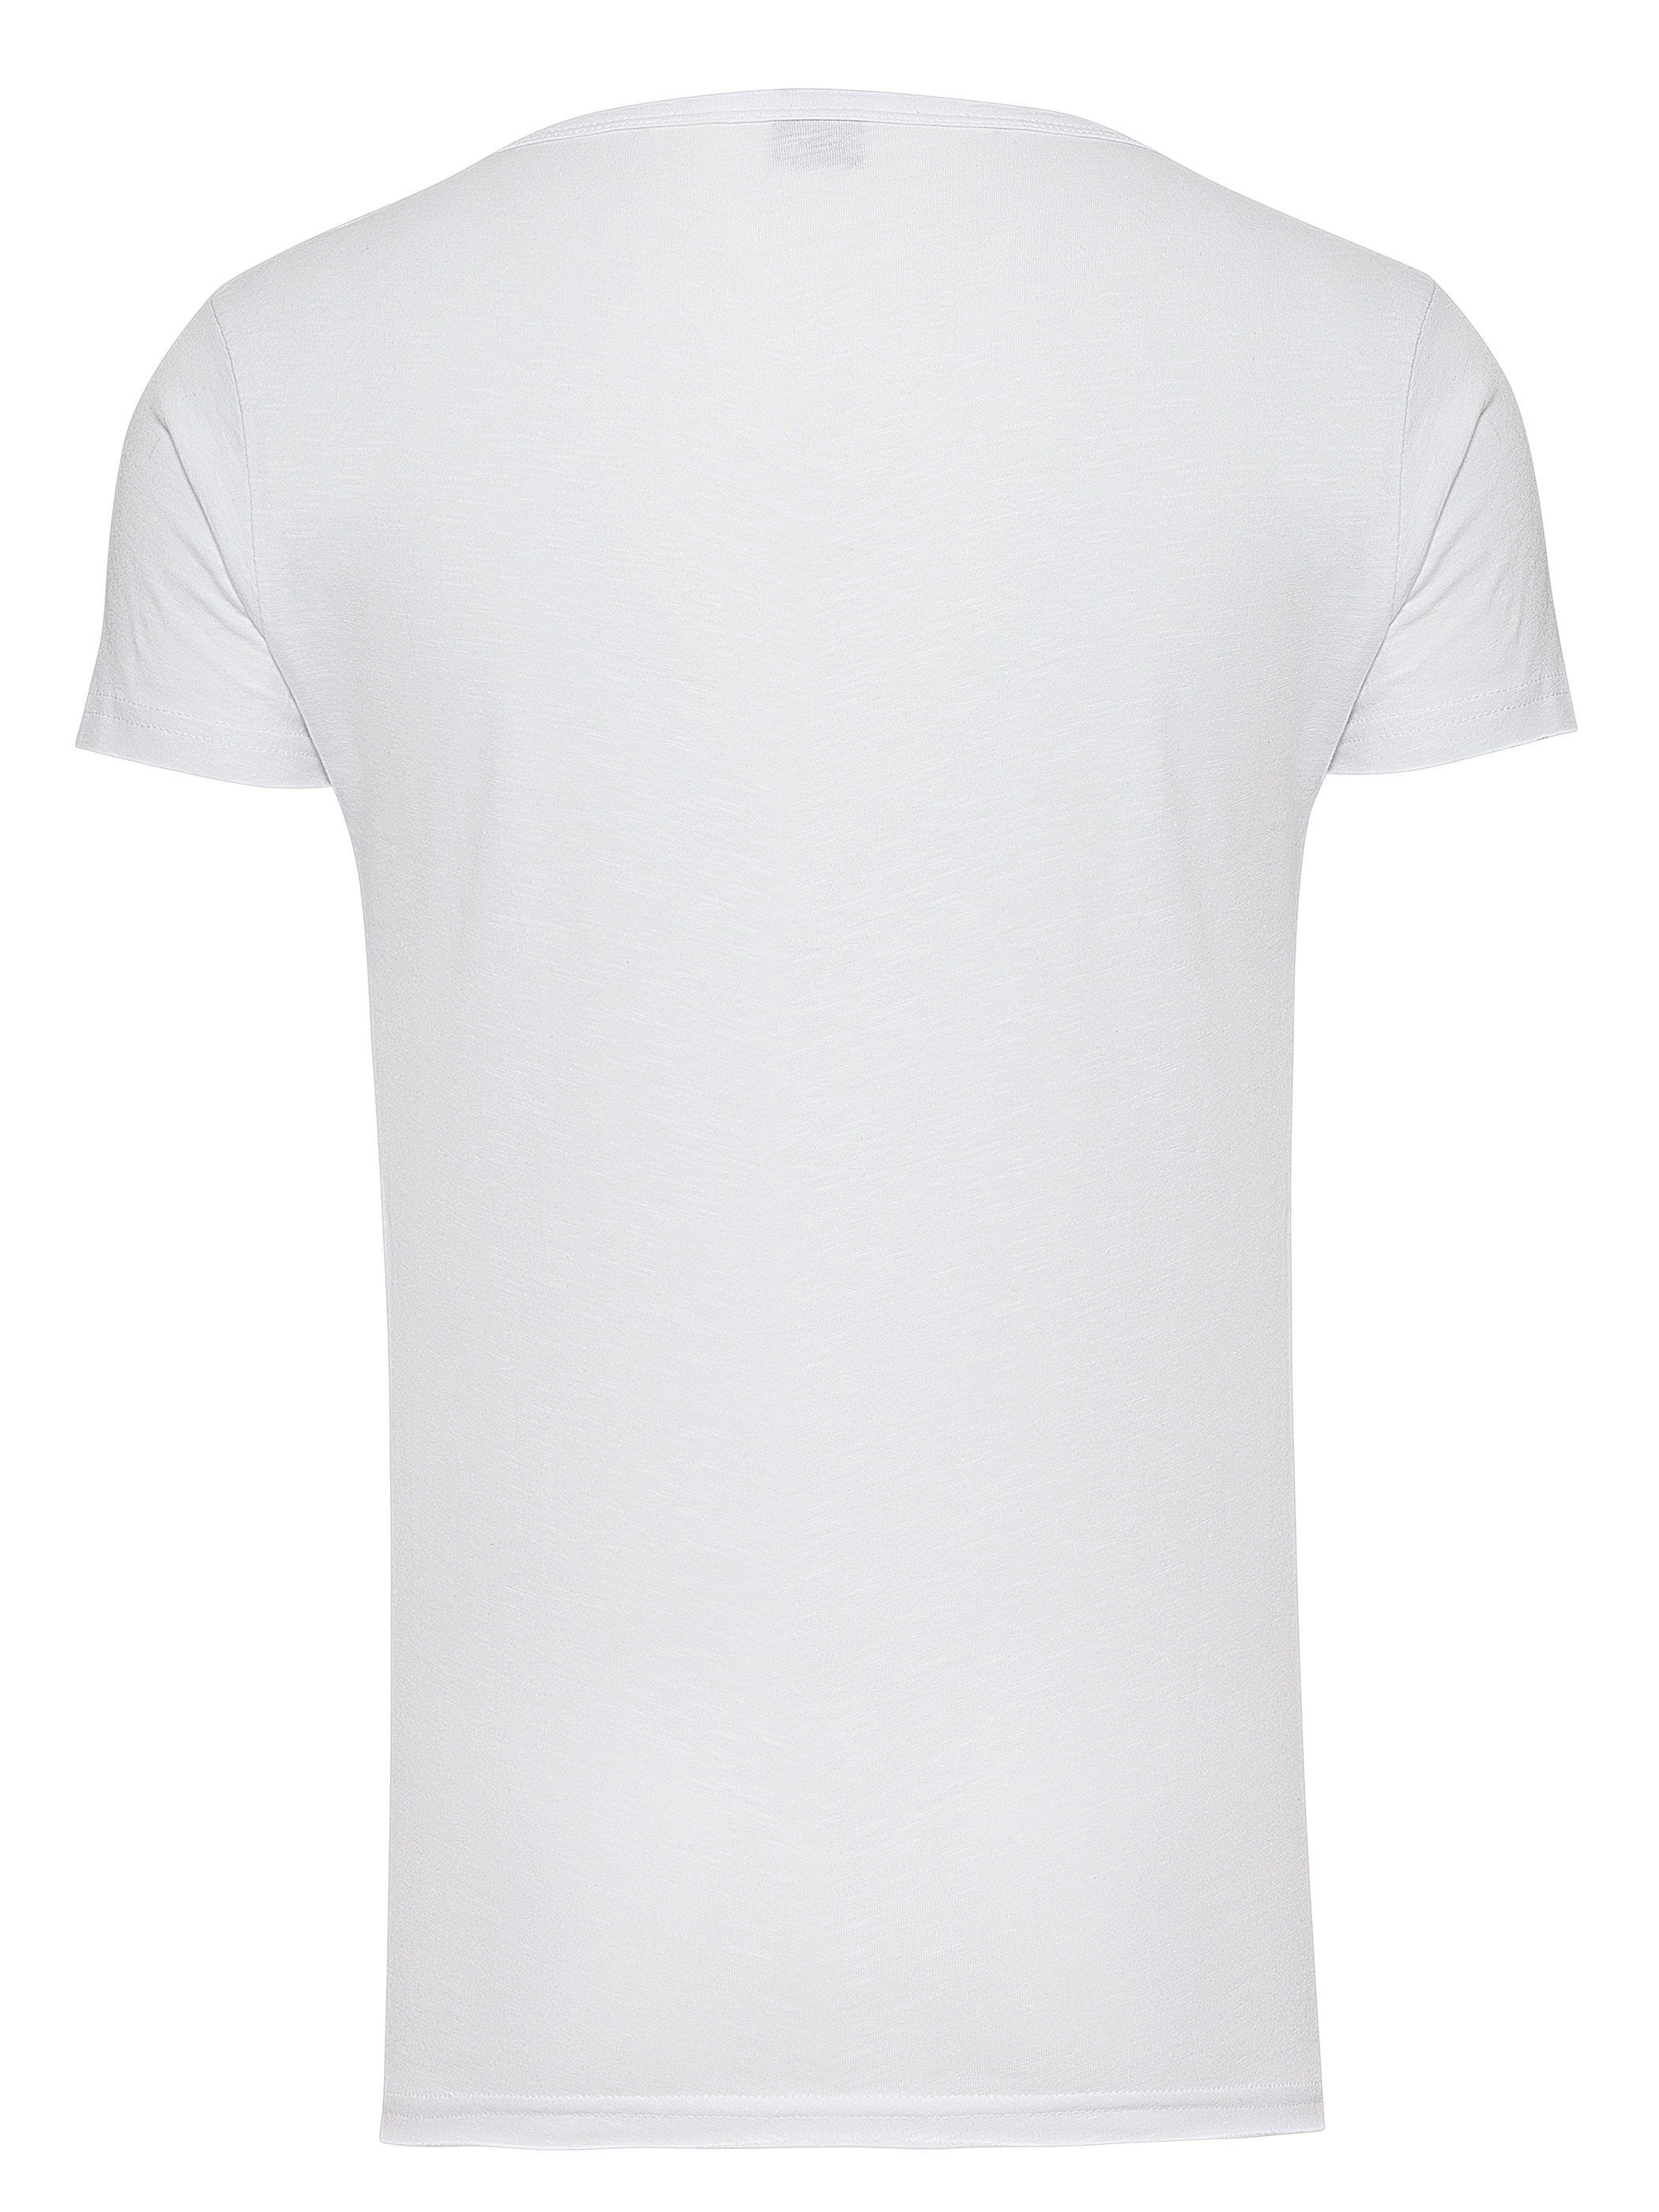 Double T-Shirt Pete (Packung) V-Neck WOTEGA V-Neck Layer Double dancer Pete (cloud T-Shirt 114201) Layer T-Shirt Weiß